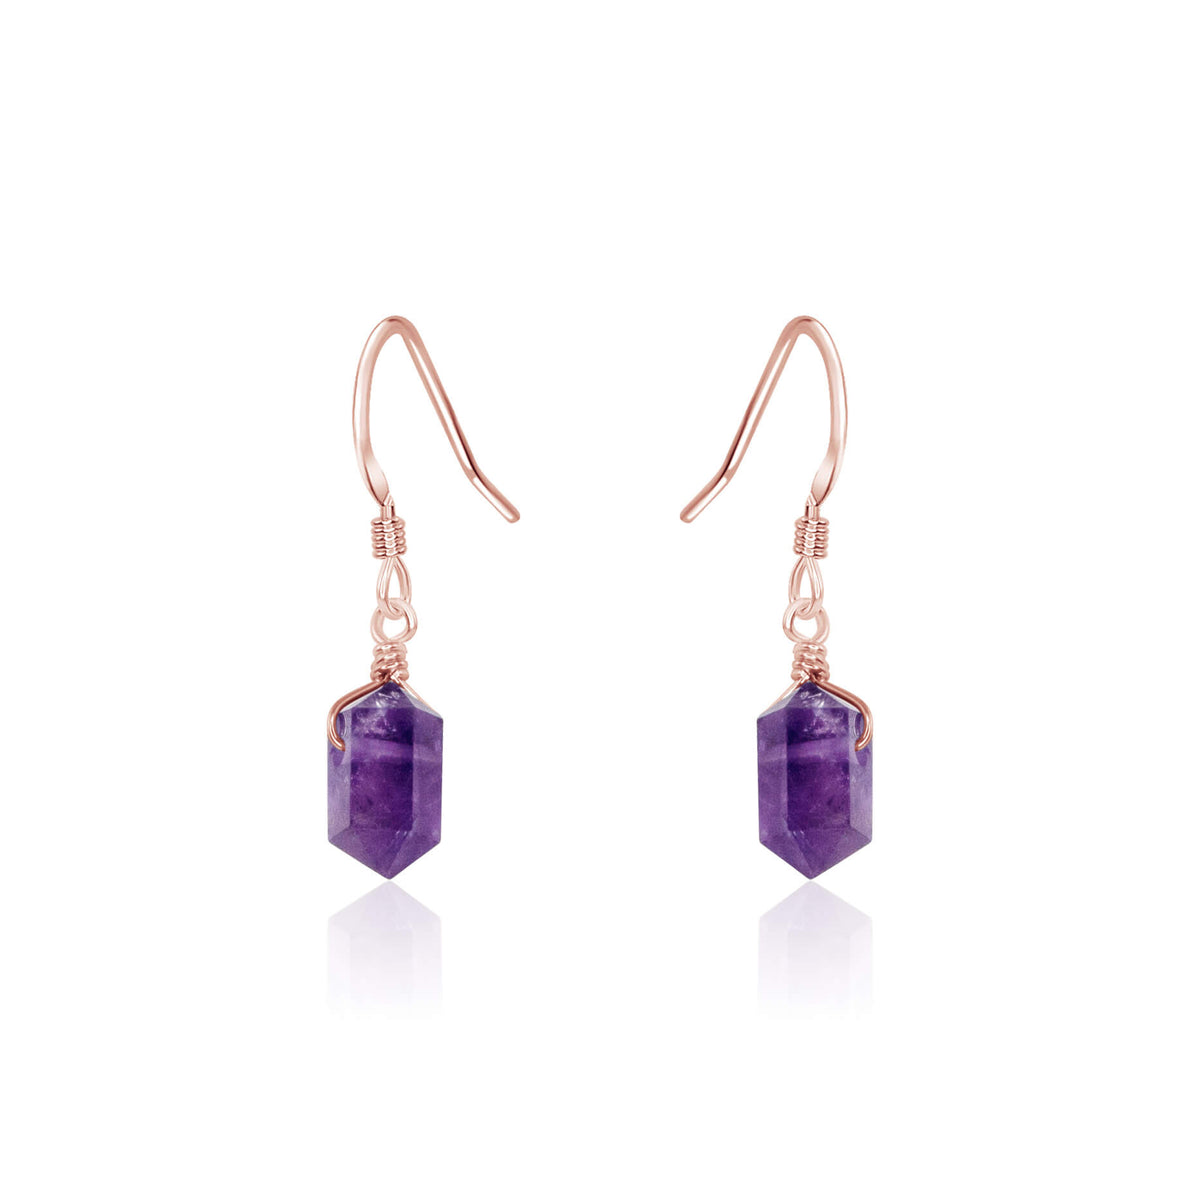 Double Terminated Crystal Dangle Drop Earrings - Amethyst - 14K Rose Gold Fill - Luna Tide Handmade Jewellery